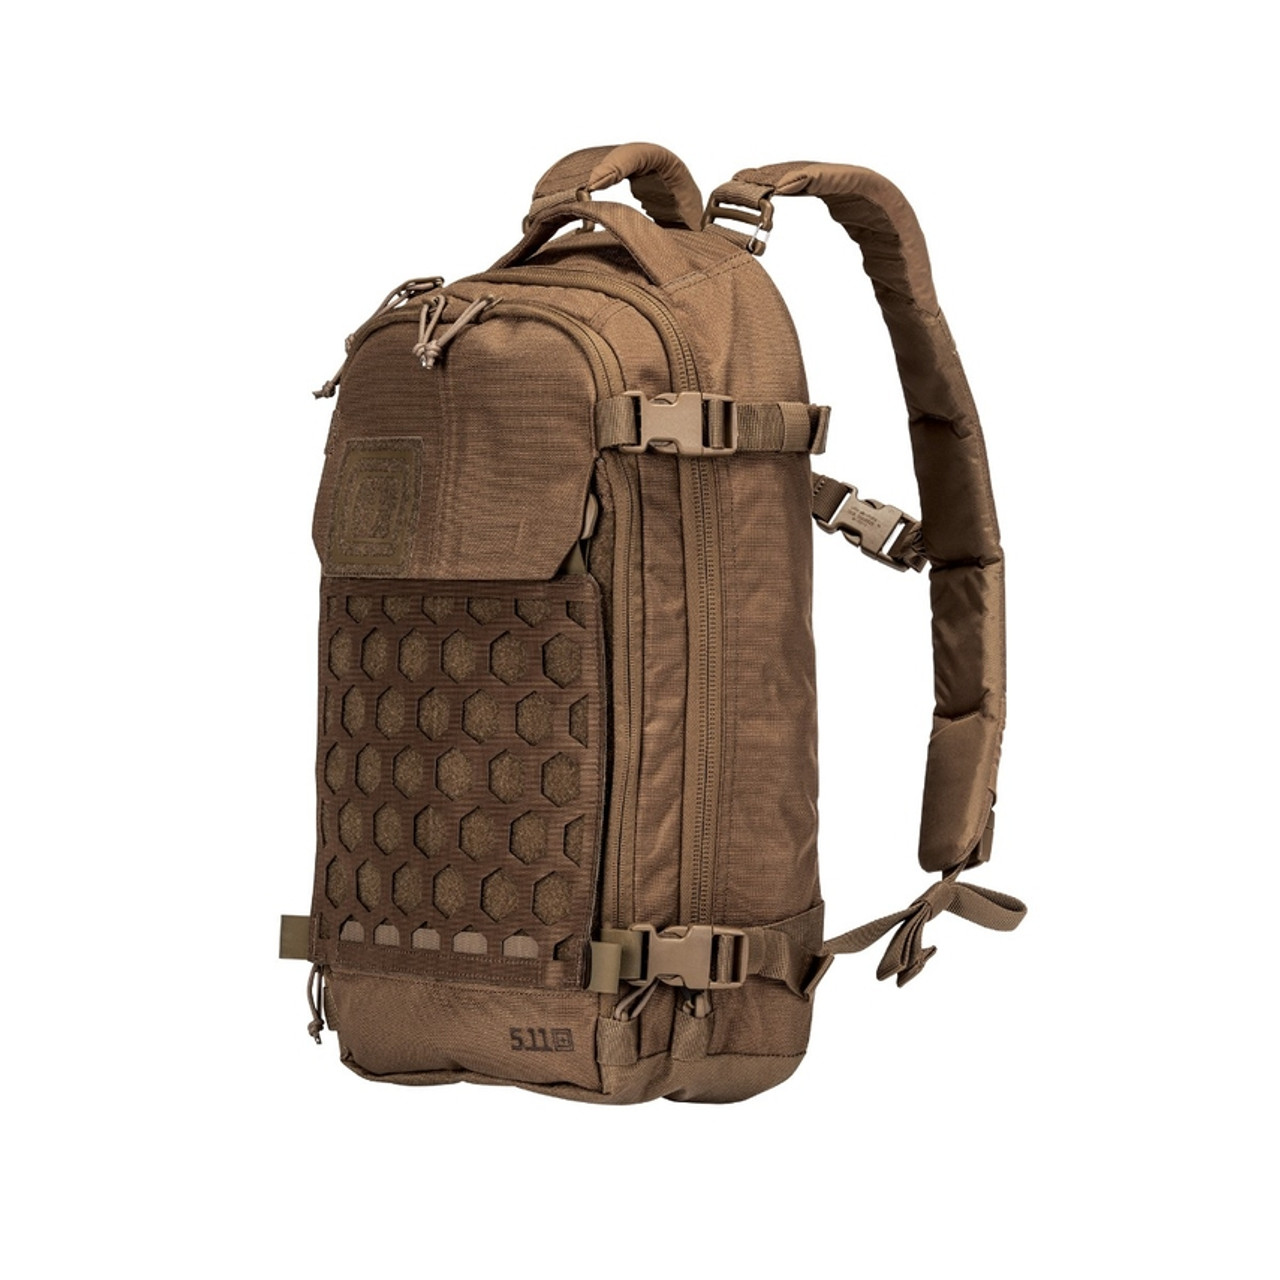 5.11 Tactical LV10 Backpack 13L - 56437-053